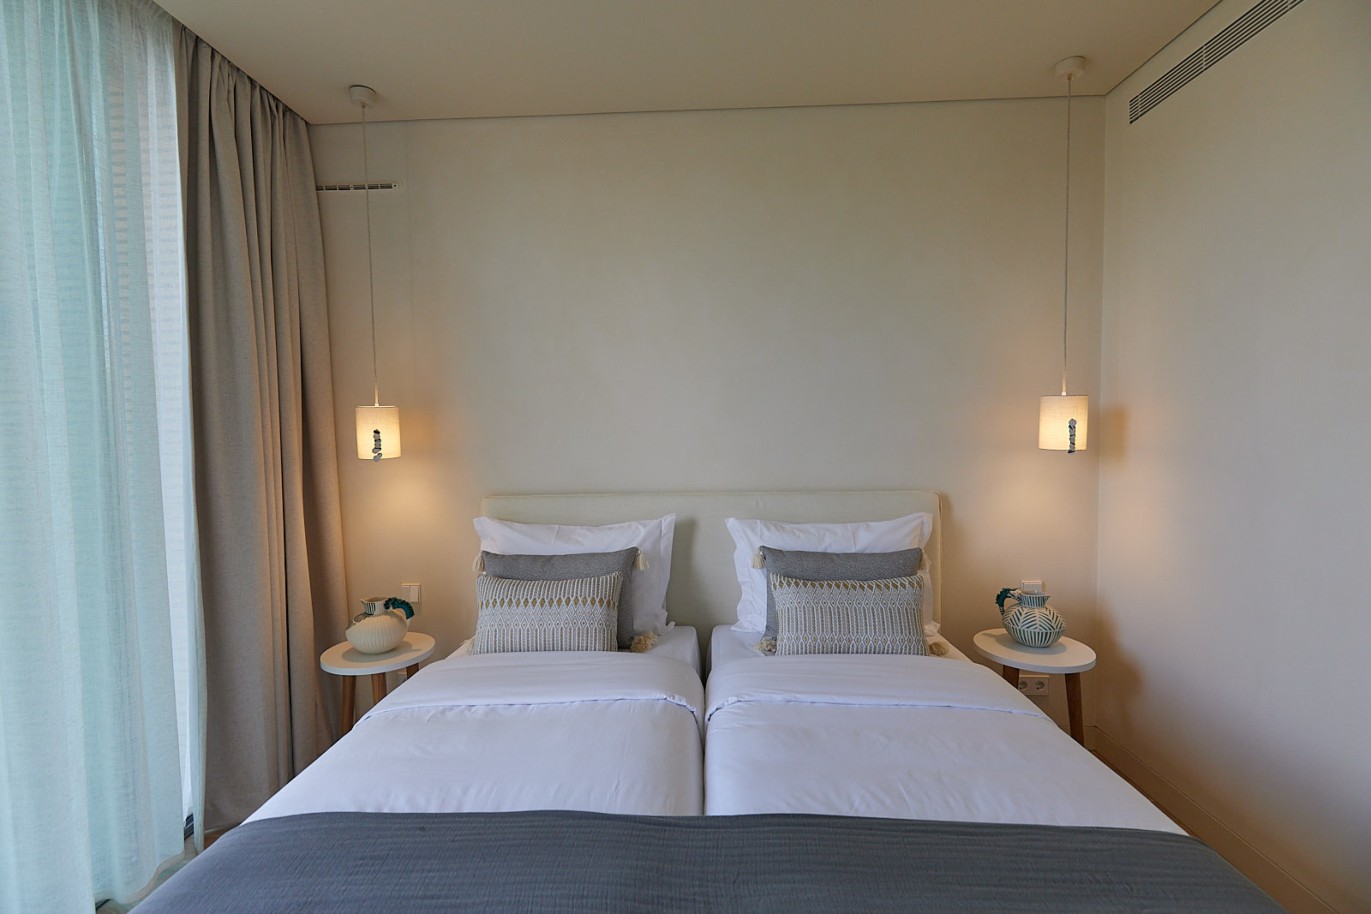 2 bedroom apartment in resort, for sale in Porches, Algarve_229177